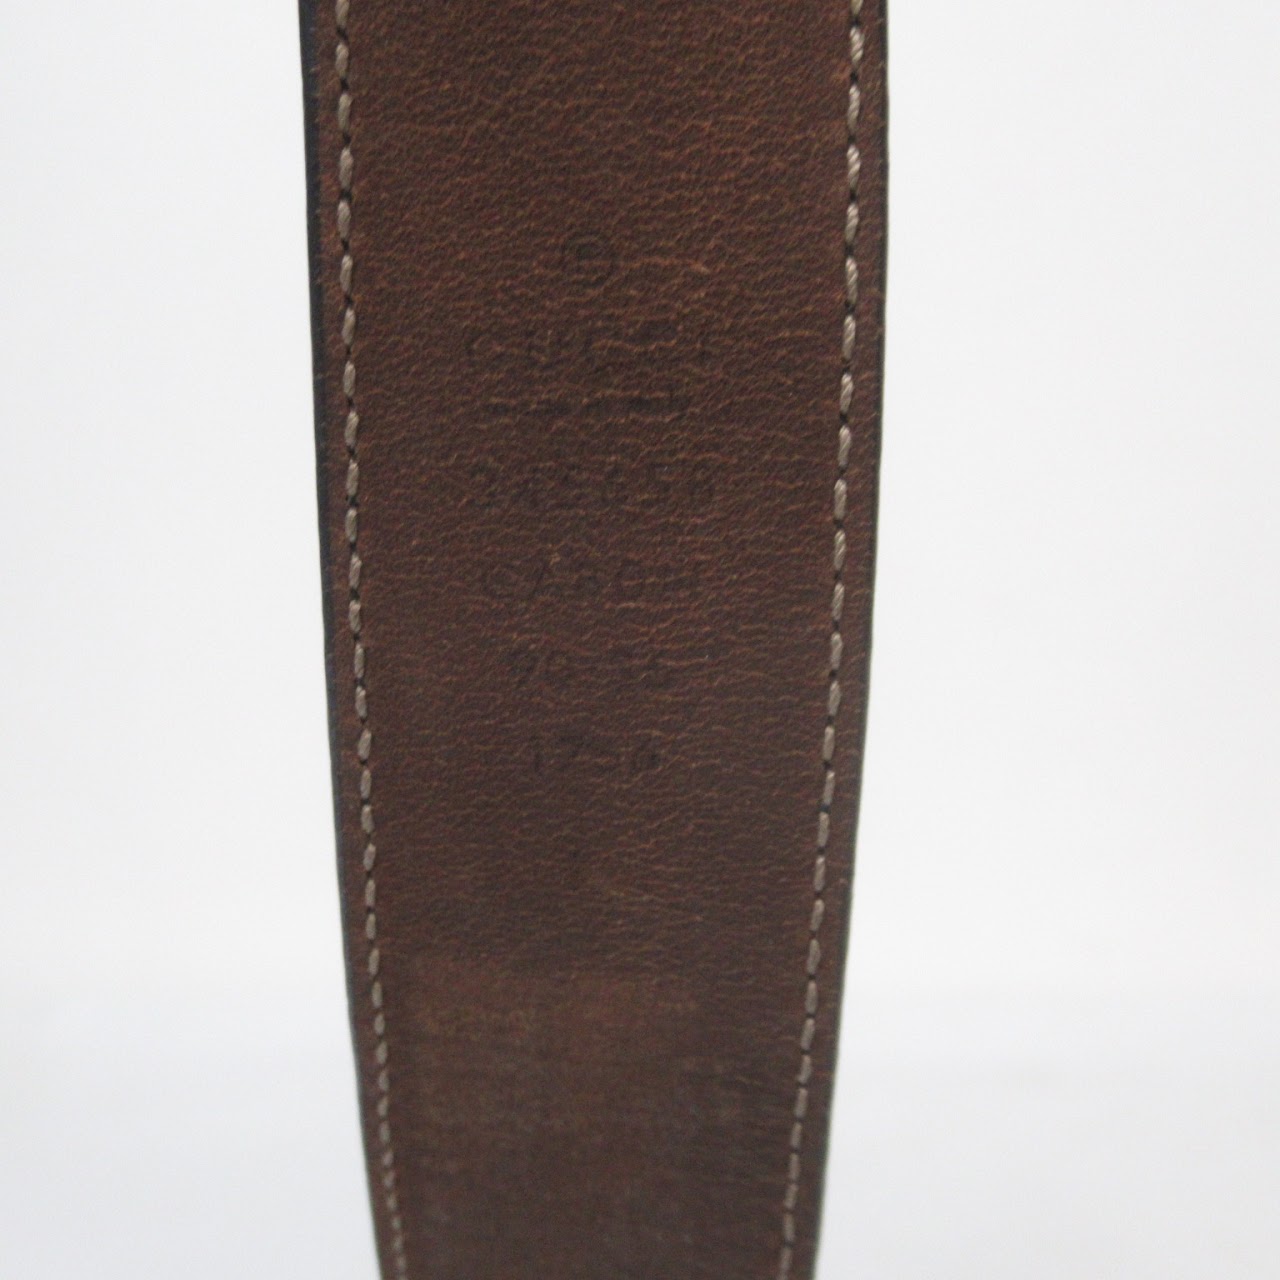 Gucci Patent Leather Belt